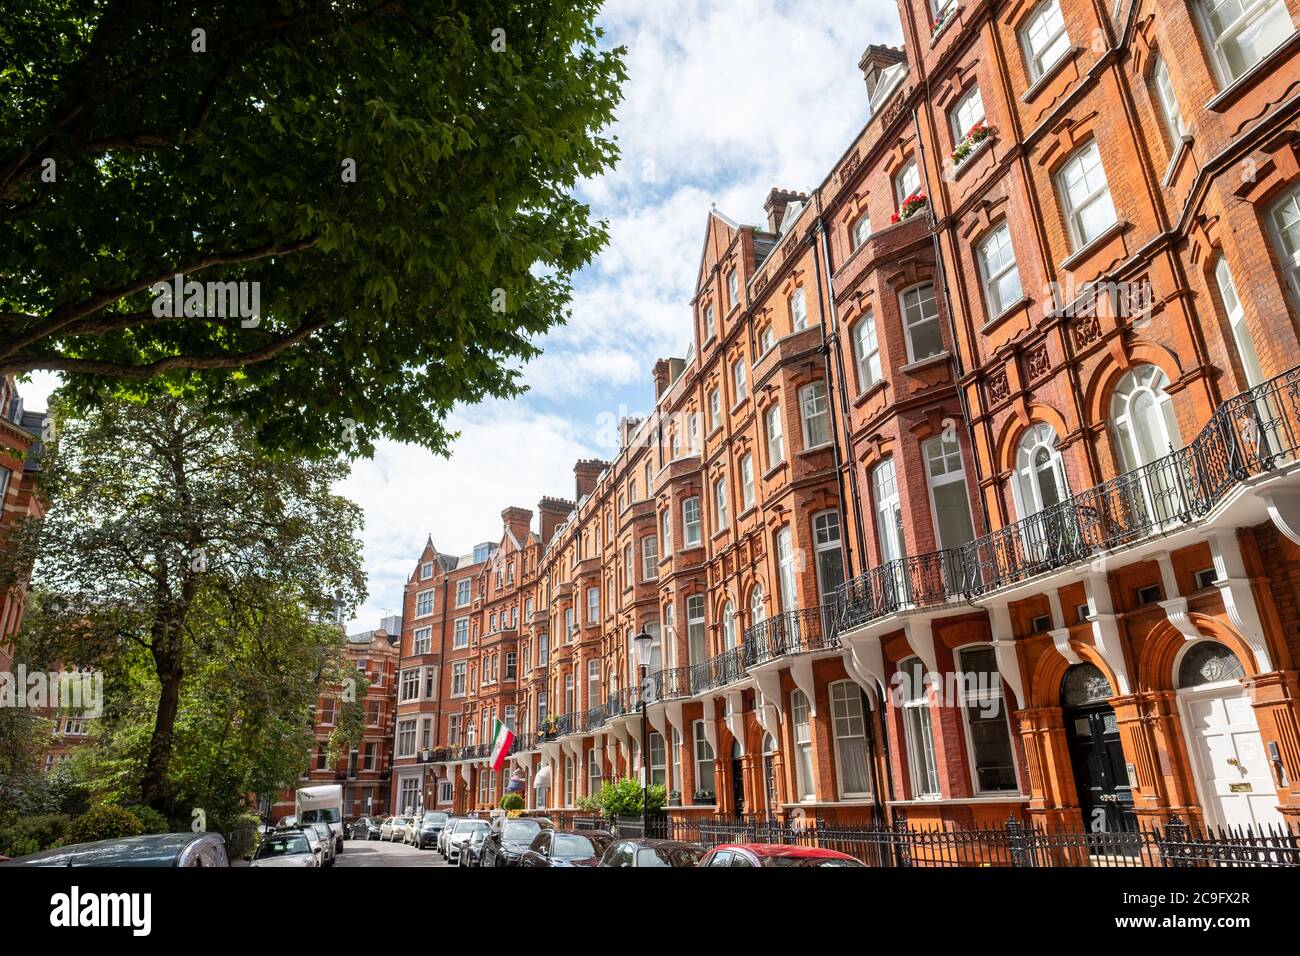 London, July, 2020: Grand townhouses in Kensington Stock Photo